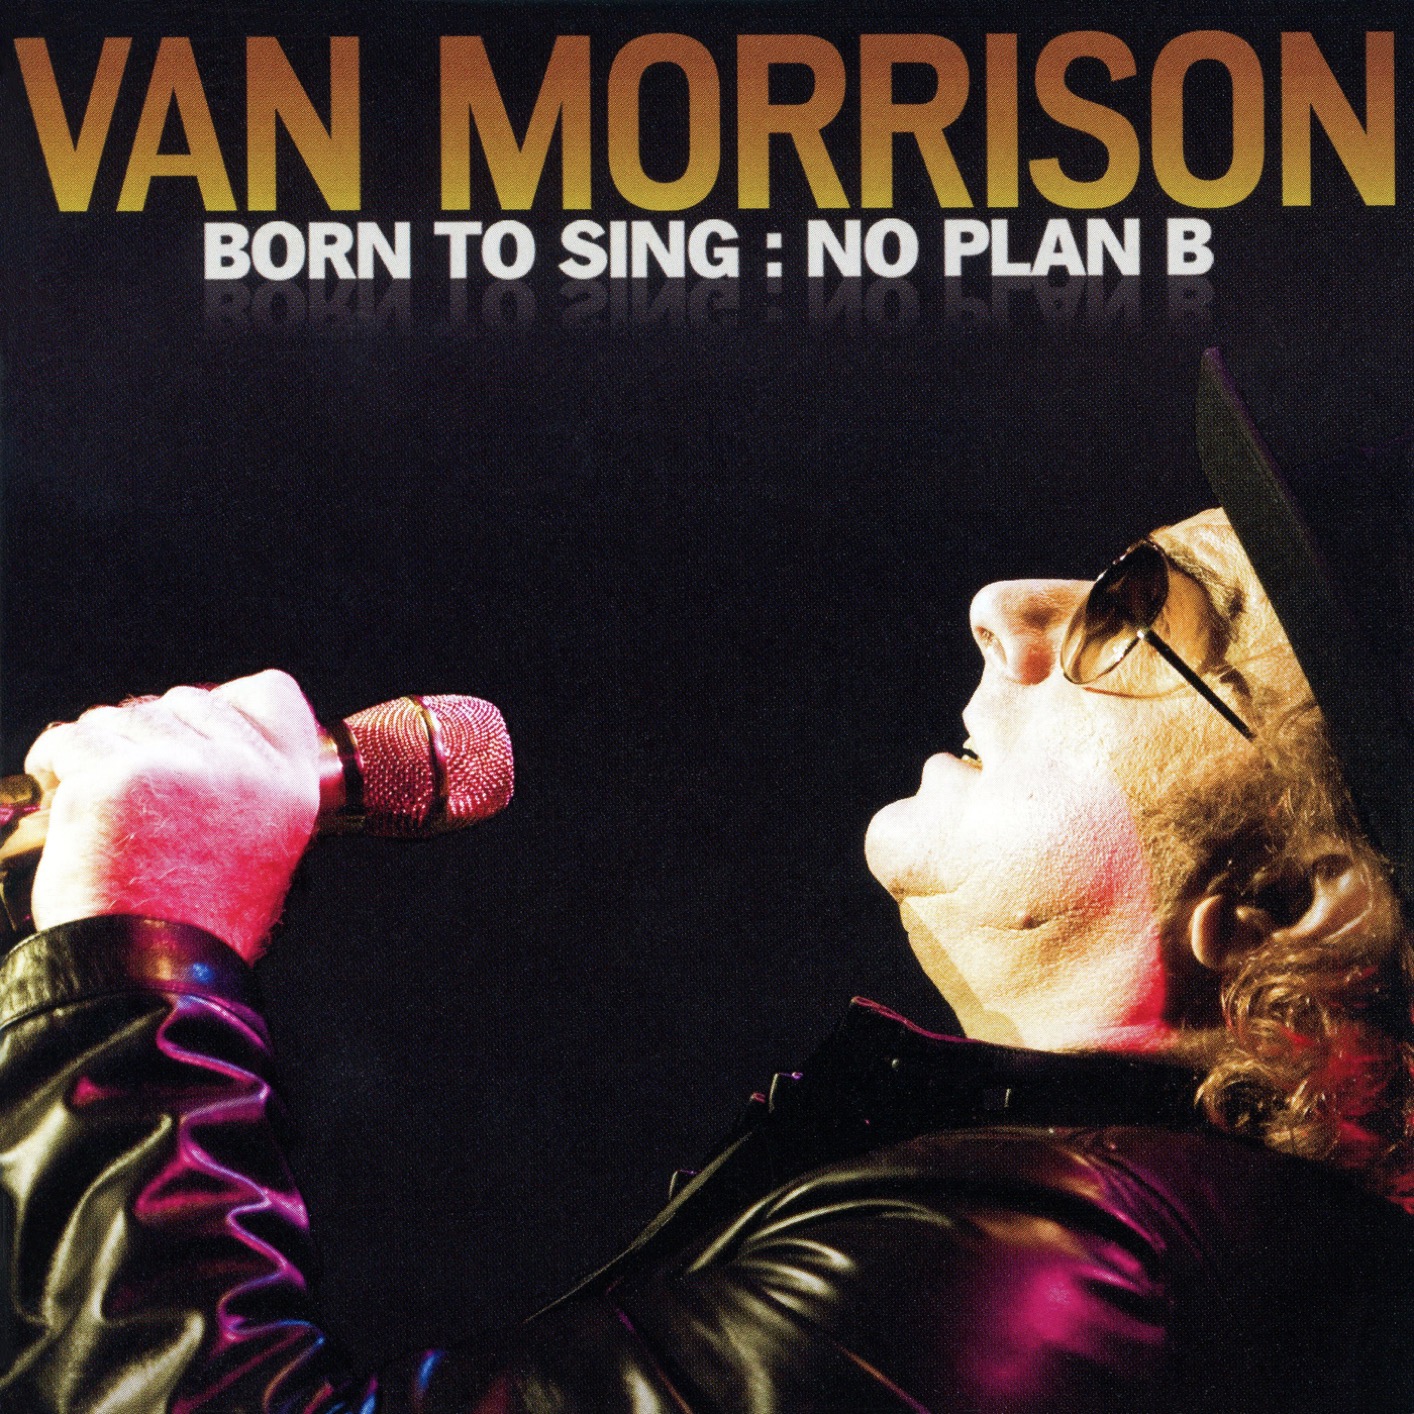 Van Morrison - Born to Sing: No Plan B (Remastered) (2012/2020) [FLAC 24bit/96kHz]